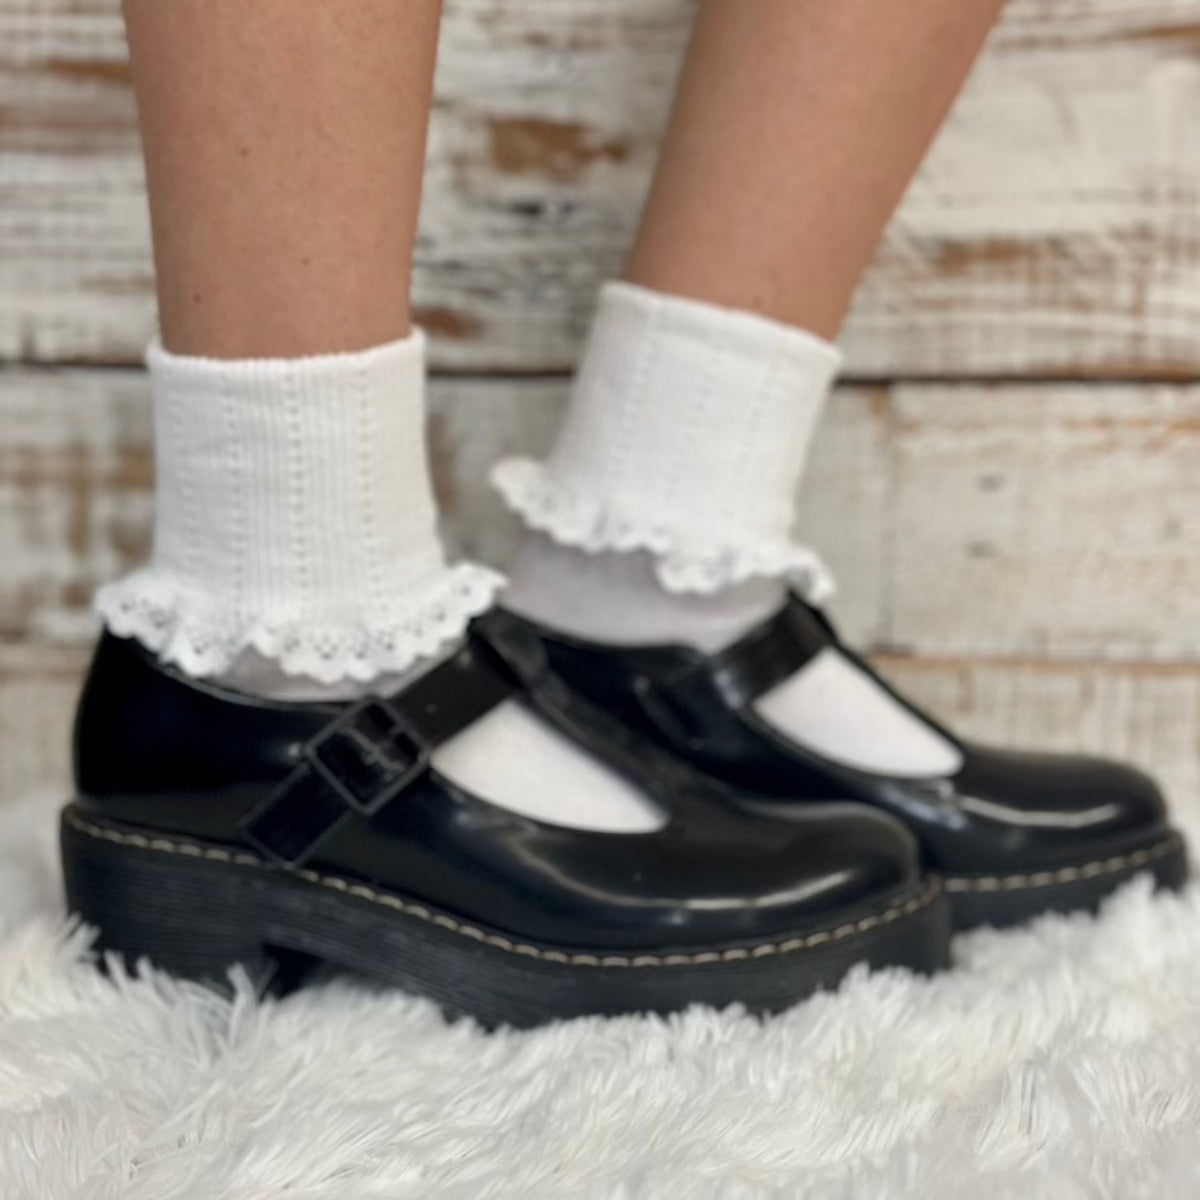 SALE lace cuff ankle socks women - white